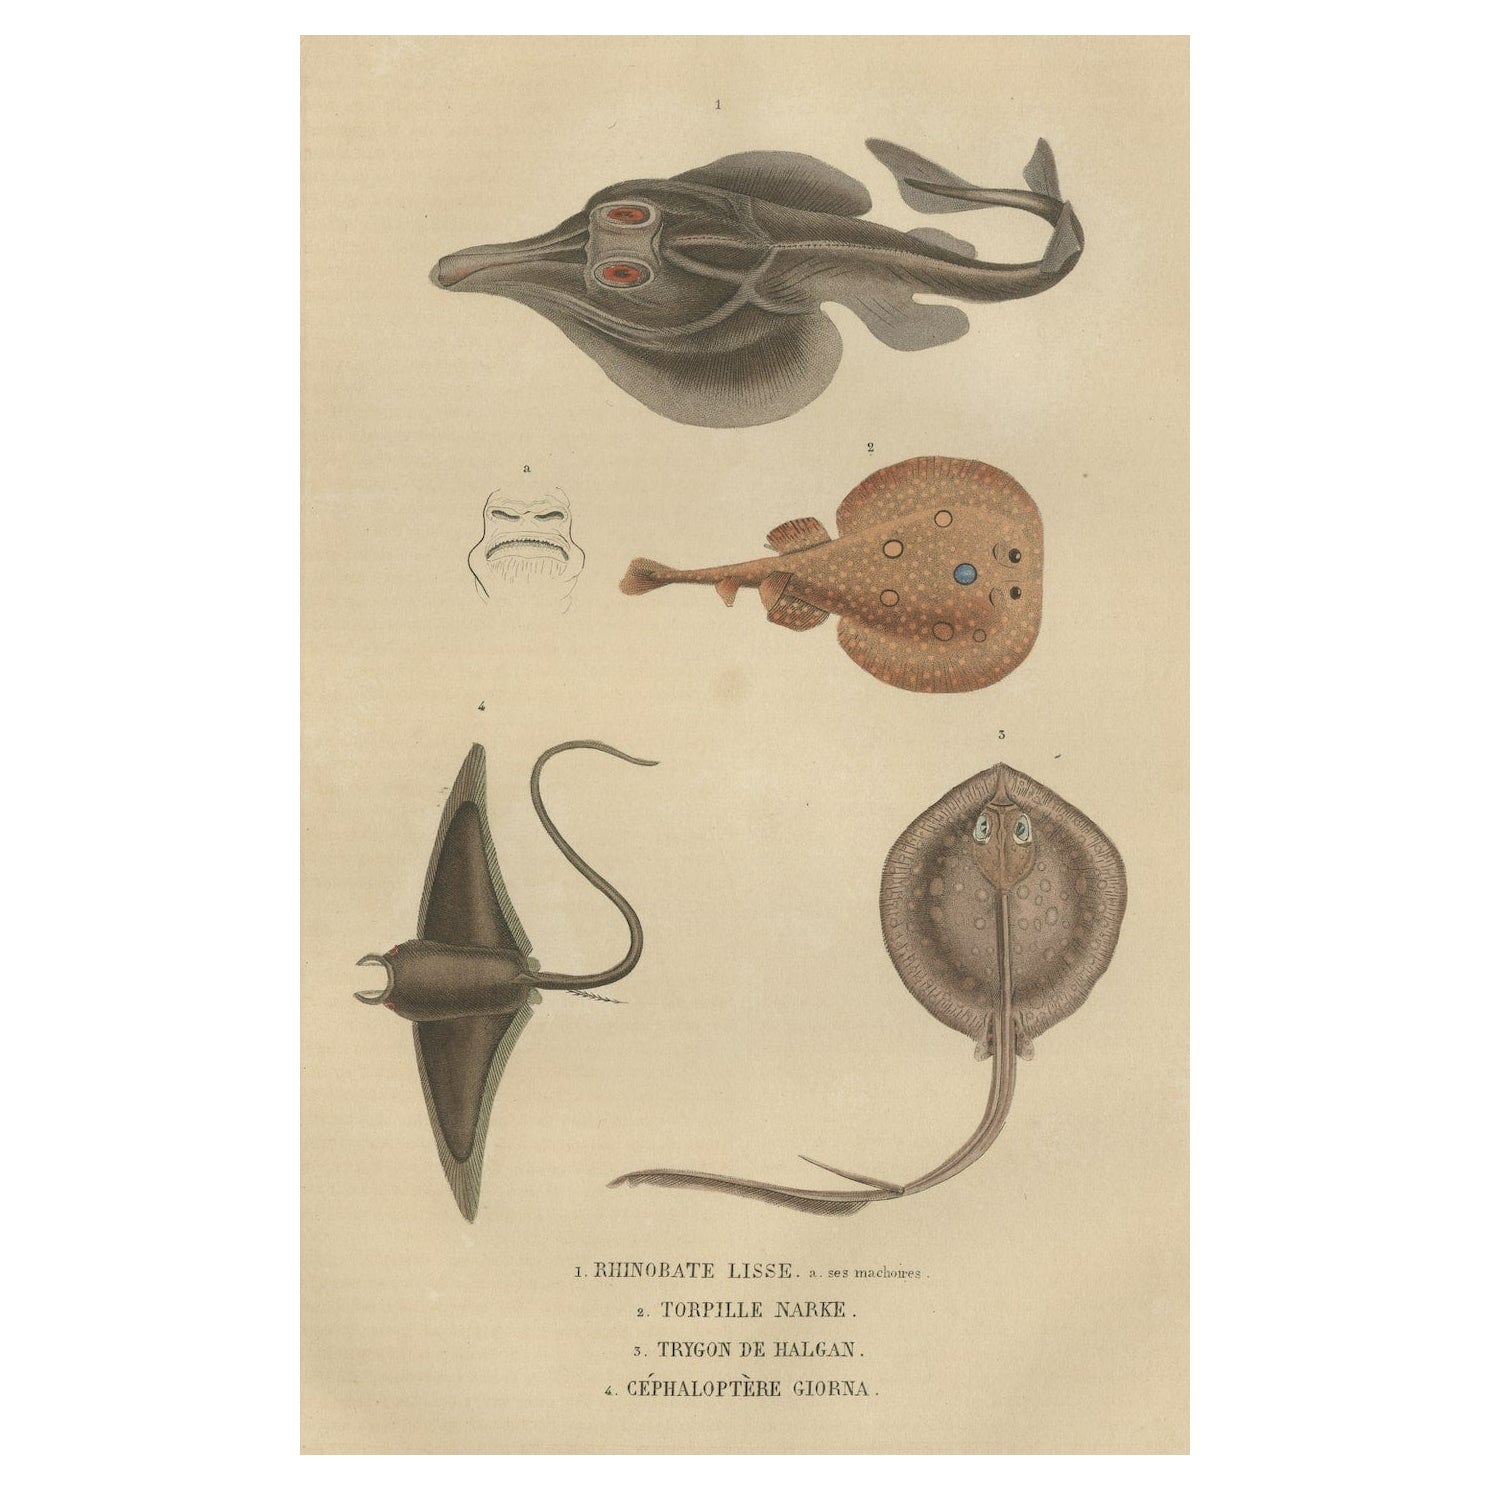 Print of a Guitarfish, Common Torpedo, Stingray & Devil fish or Giant Devil Ray